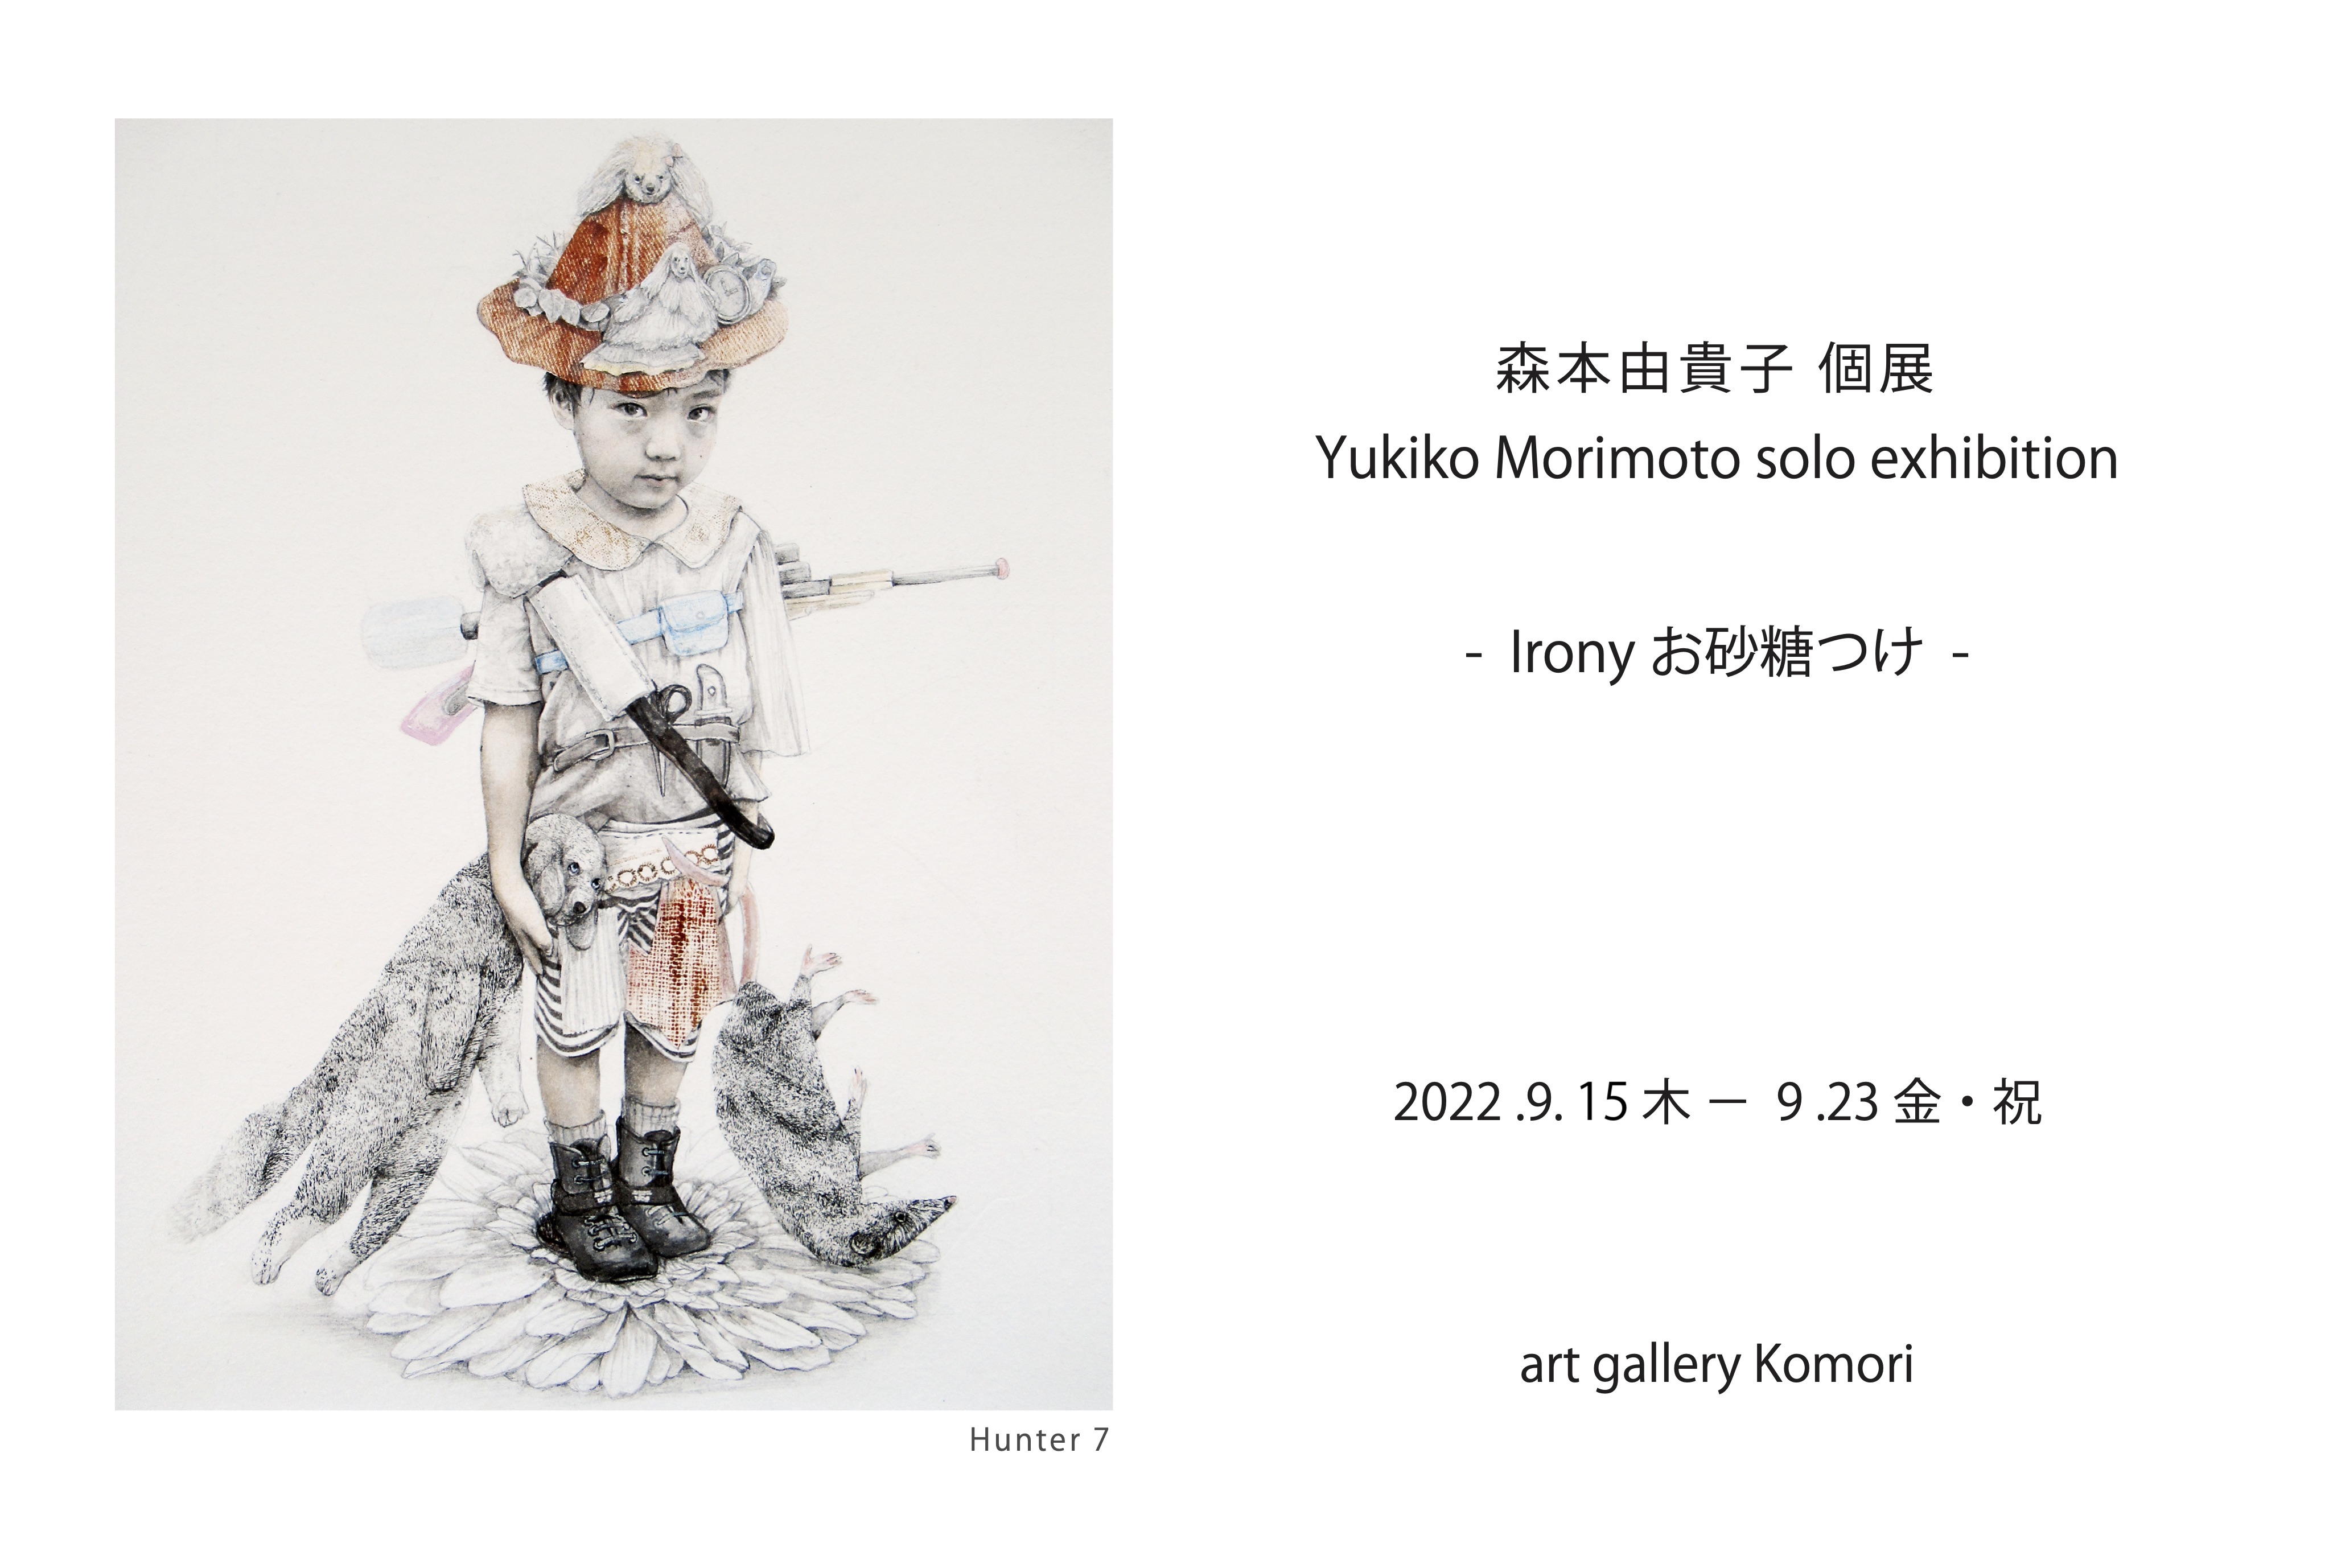 Yukiko Morimoto solo exhibition